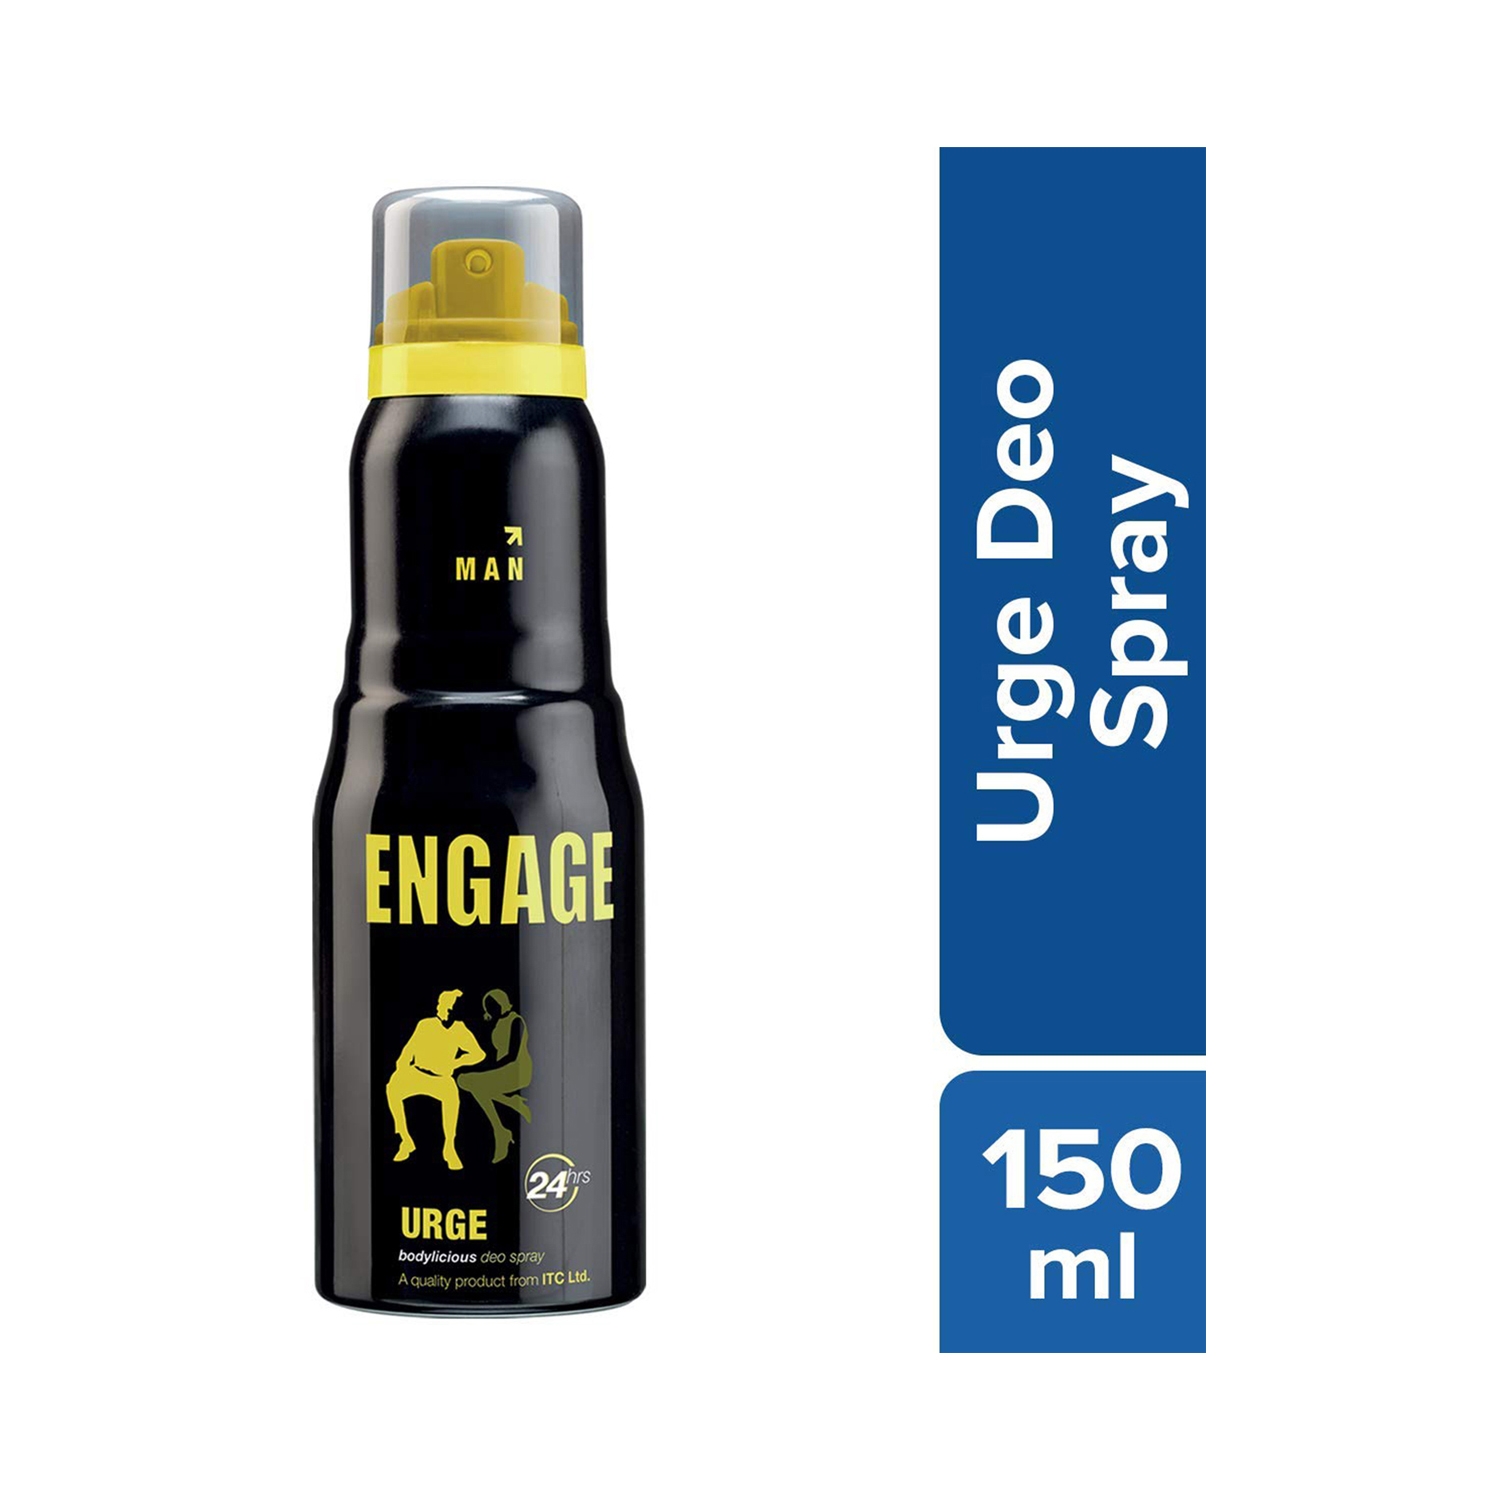 Engage | Engage Urge Deodorant Spray For Man (150ml)